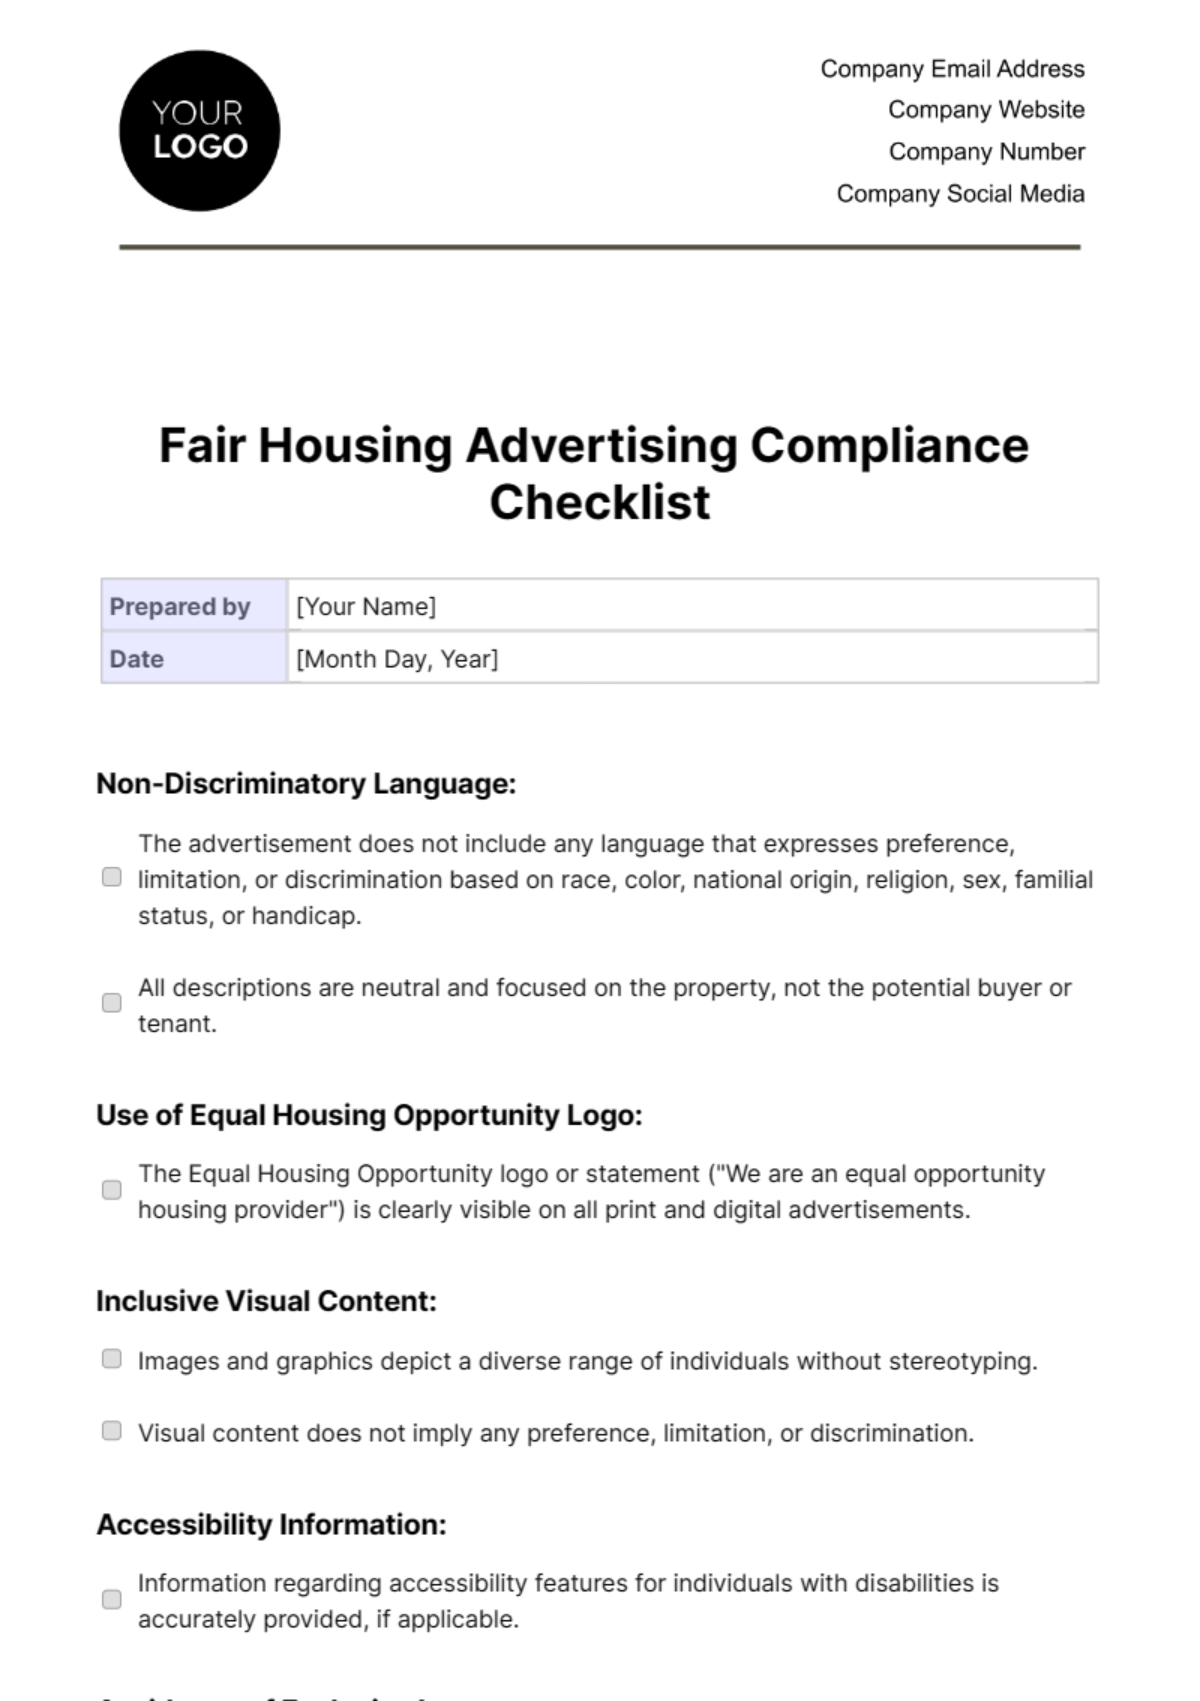 Fair Housing Advertising Compliance Checklist Template